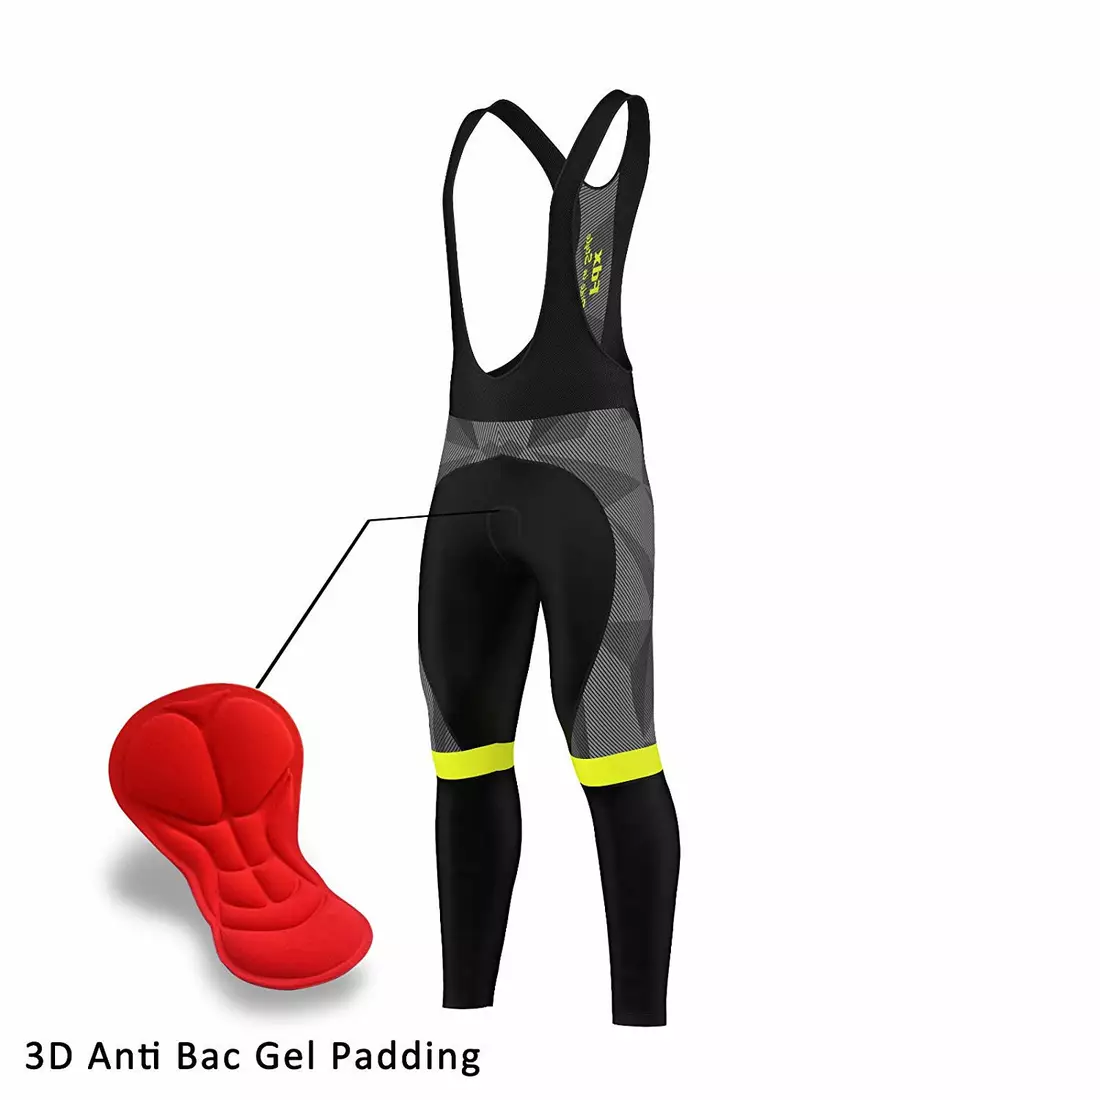 FDX 1270 insulated bib shorts, black and yellow